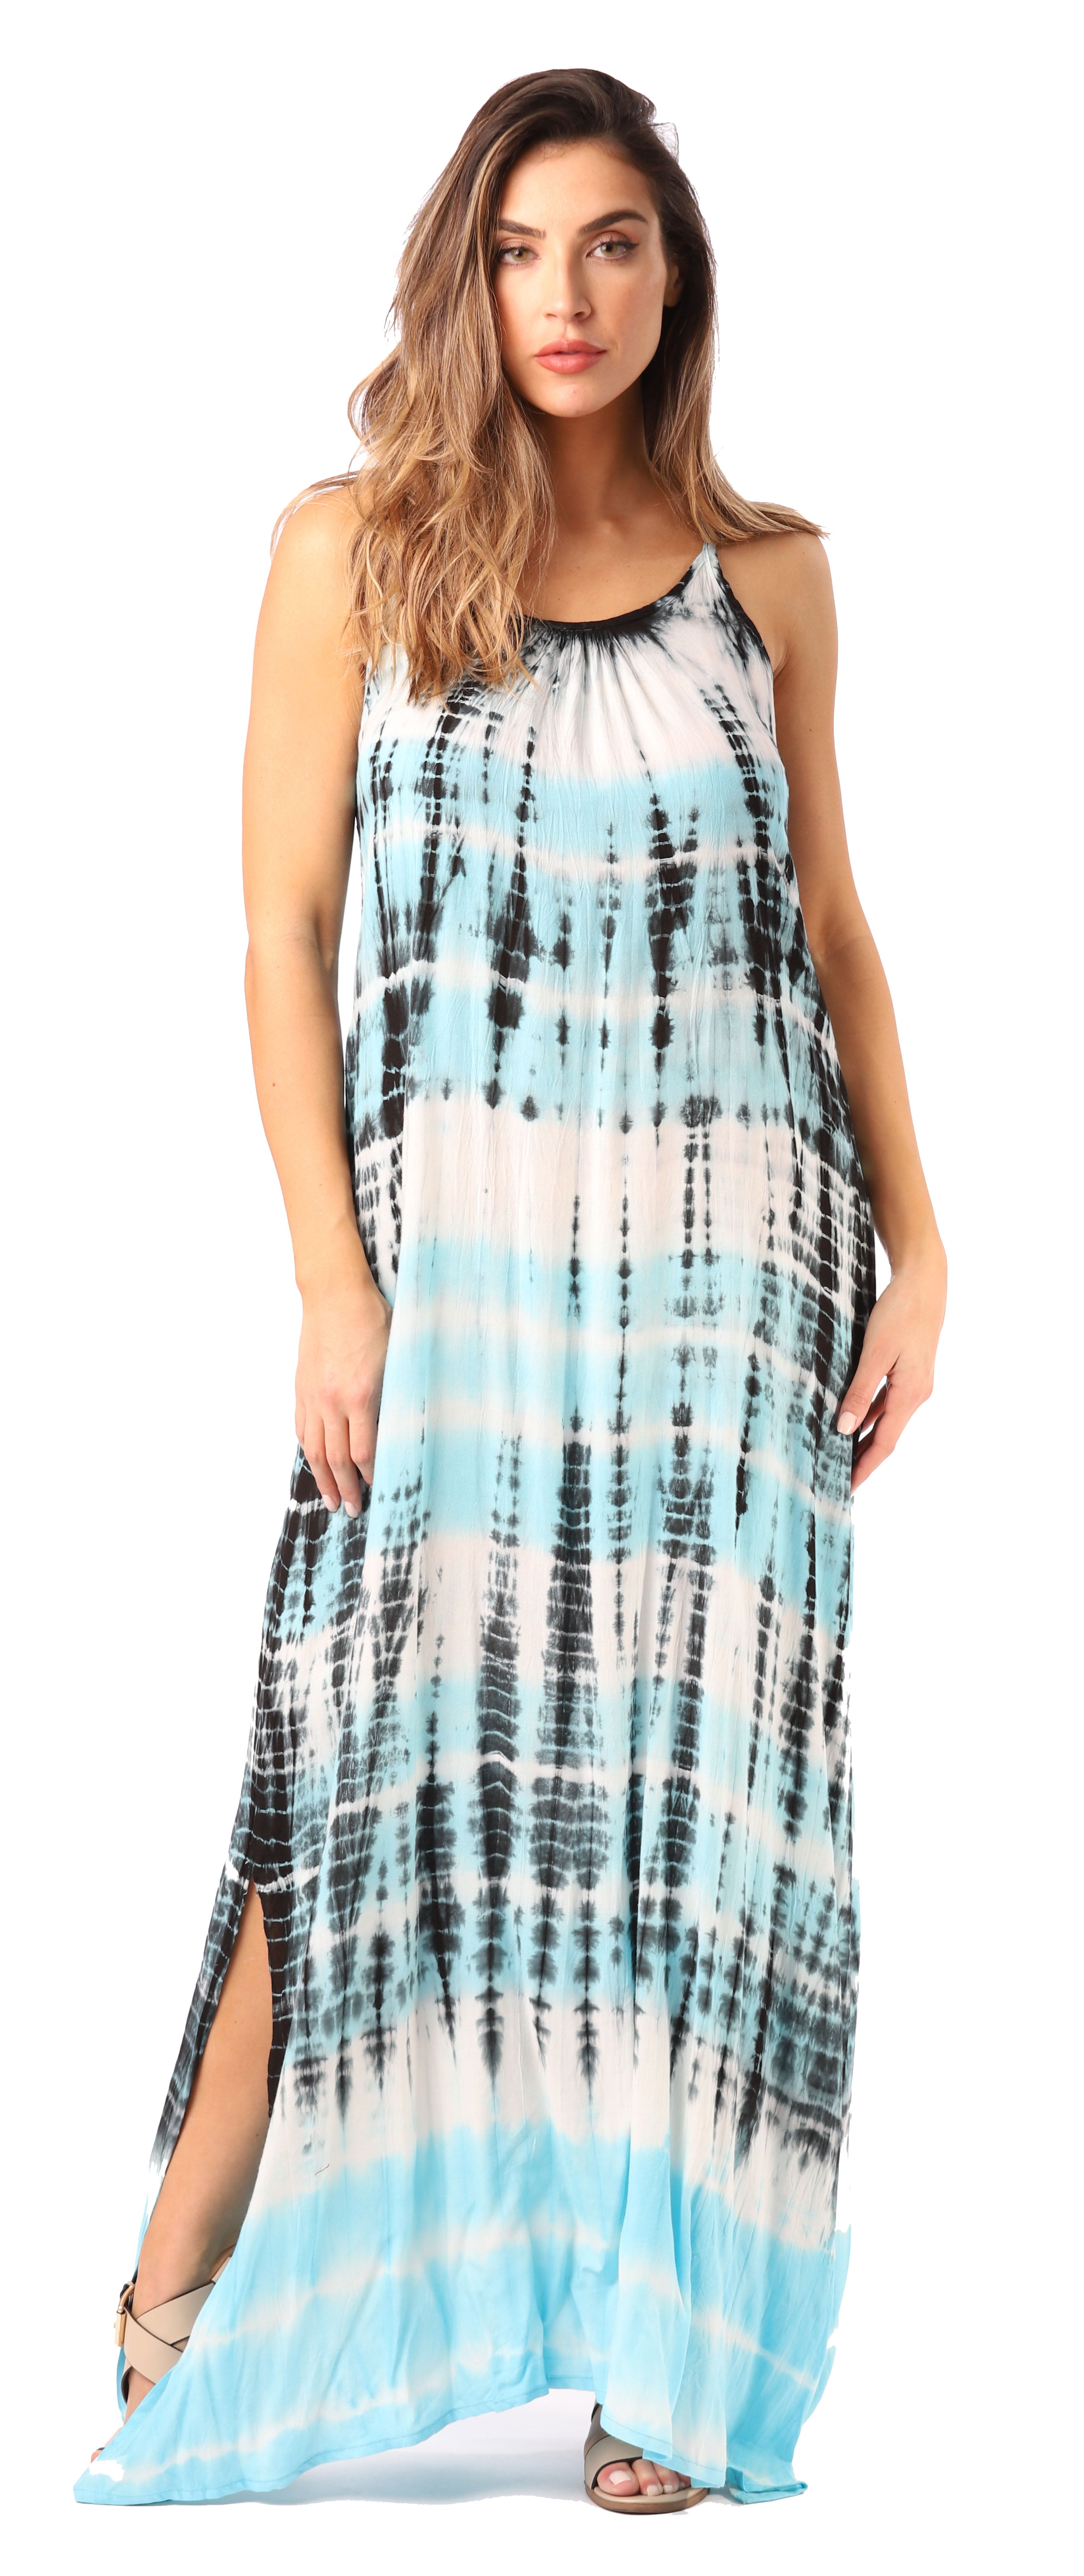 Riviera Sun Summer Dresses Maxi Dress Sundresses for Women (Medium ...